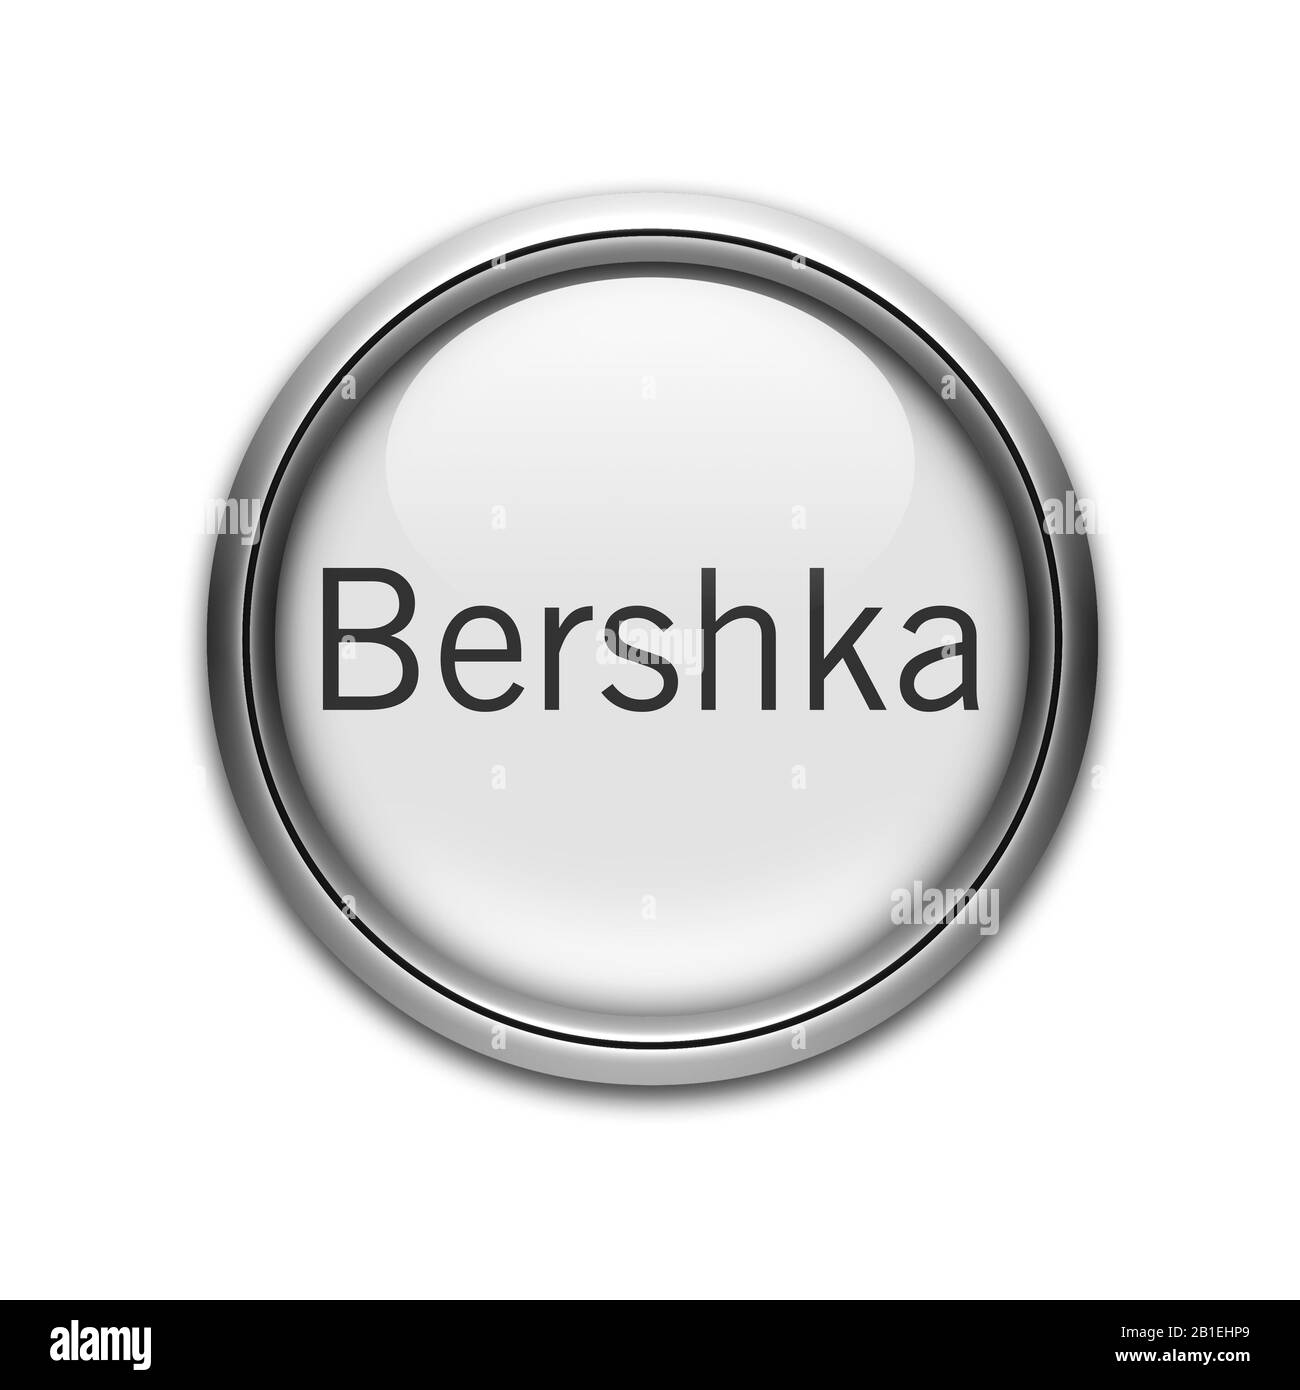 Bershka logo Stock Photo